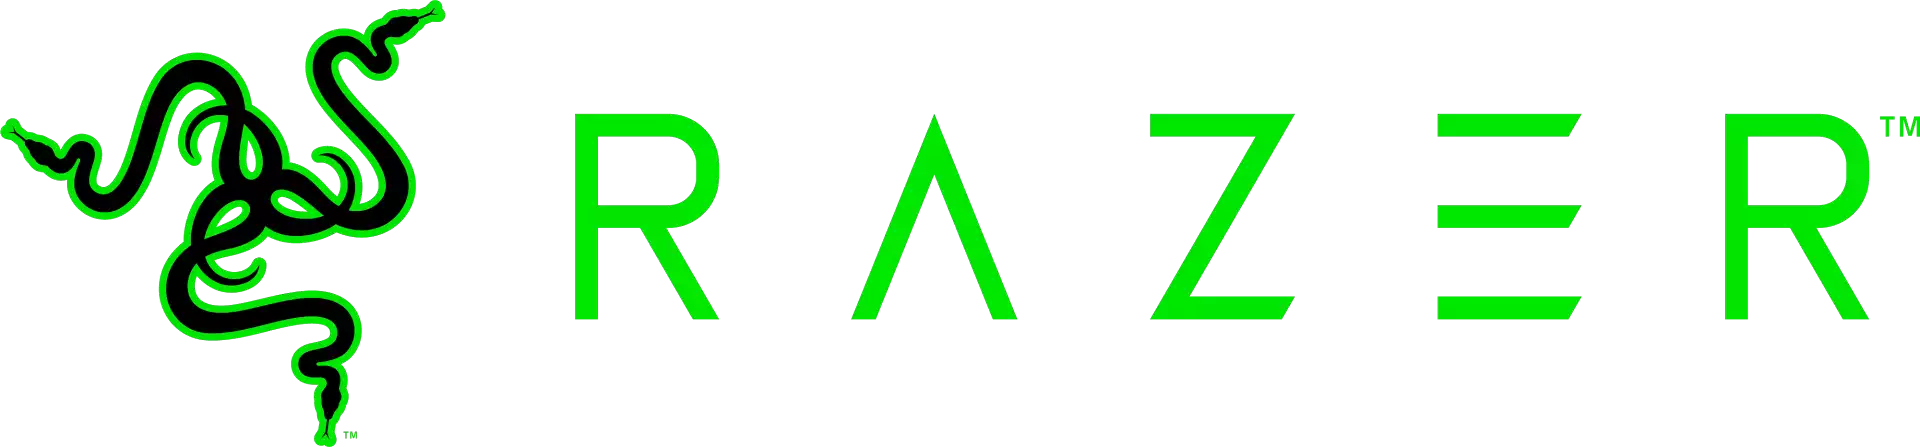 Razer Logo 82298 9be43